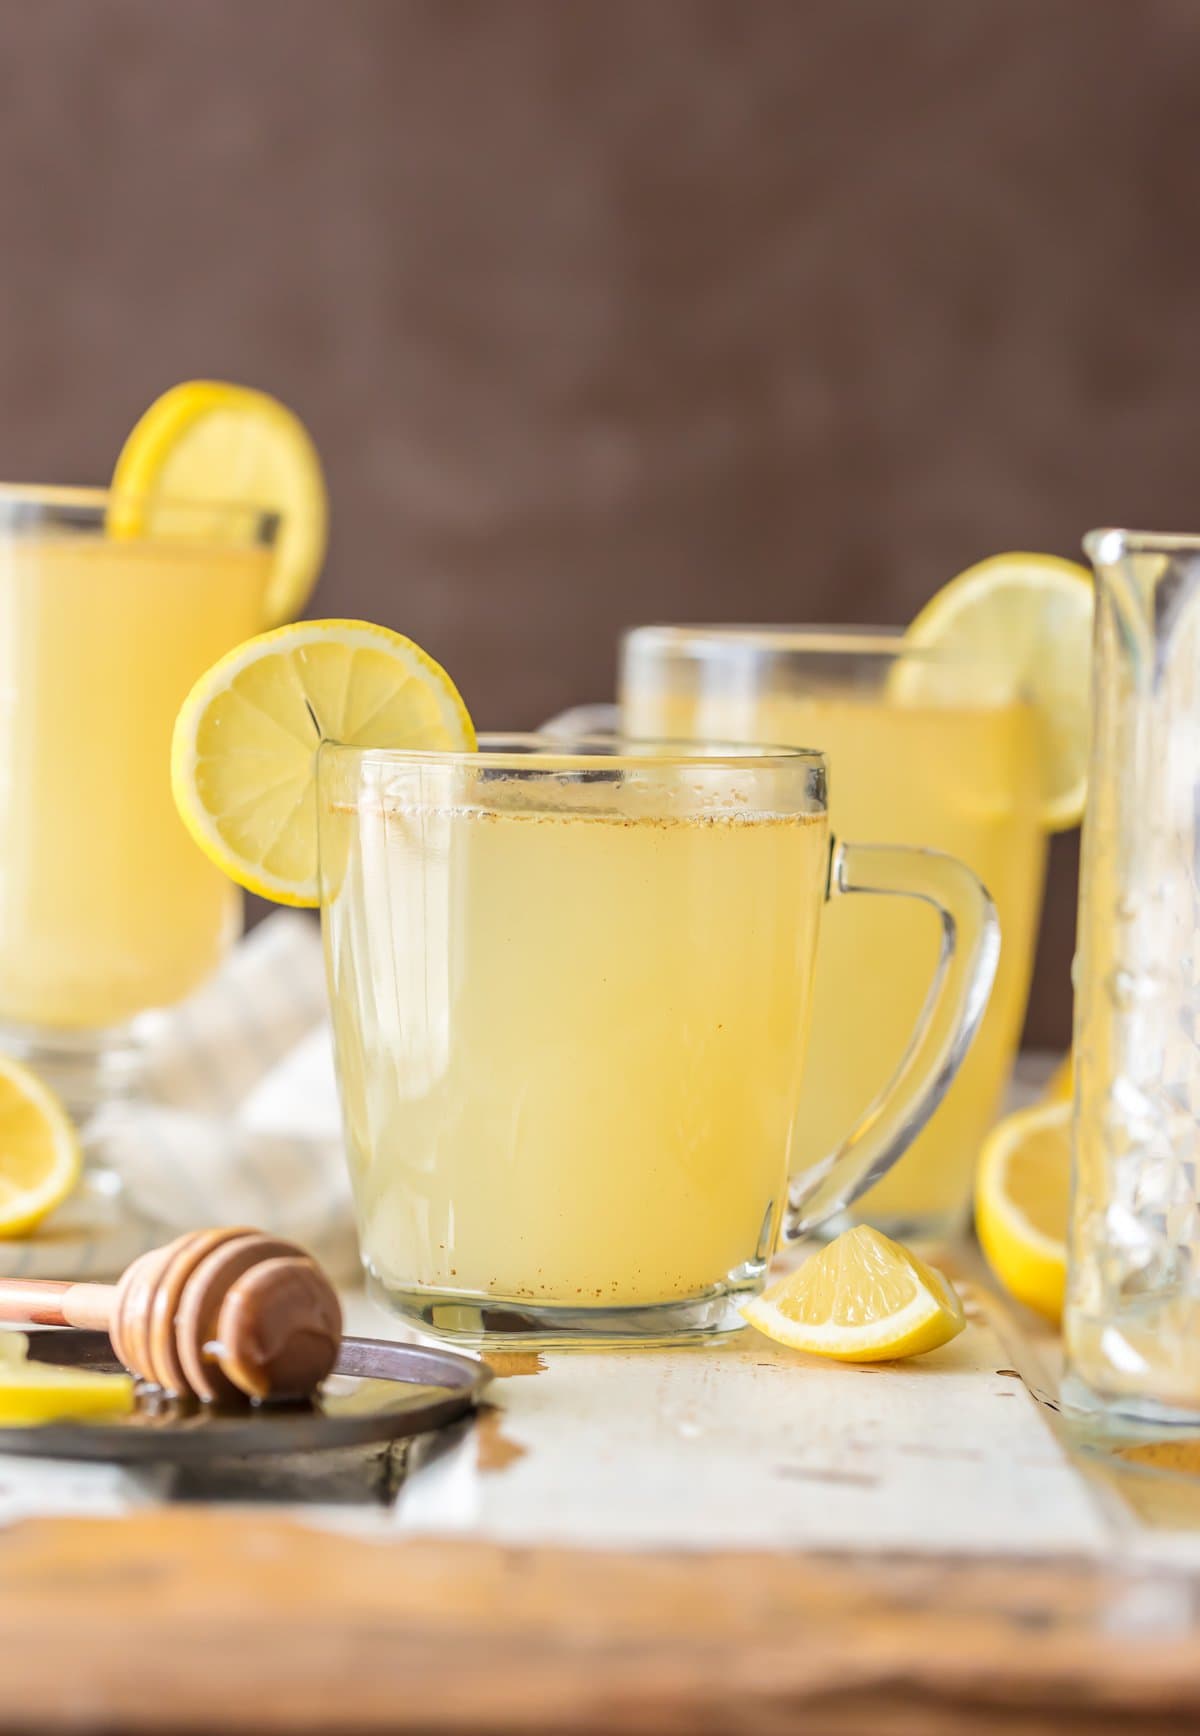 Lemon detox - Die qualitativsten Lemon detox im Vergleich